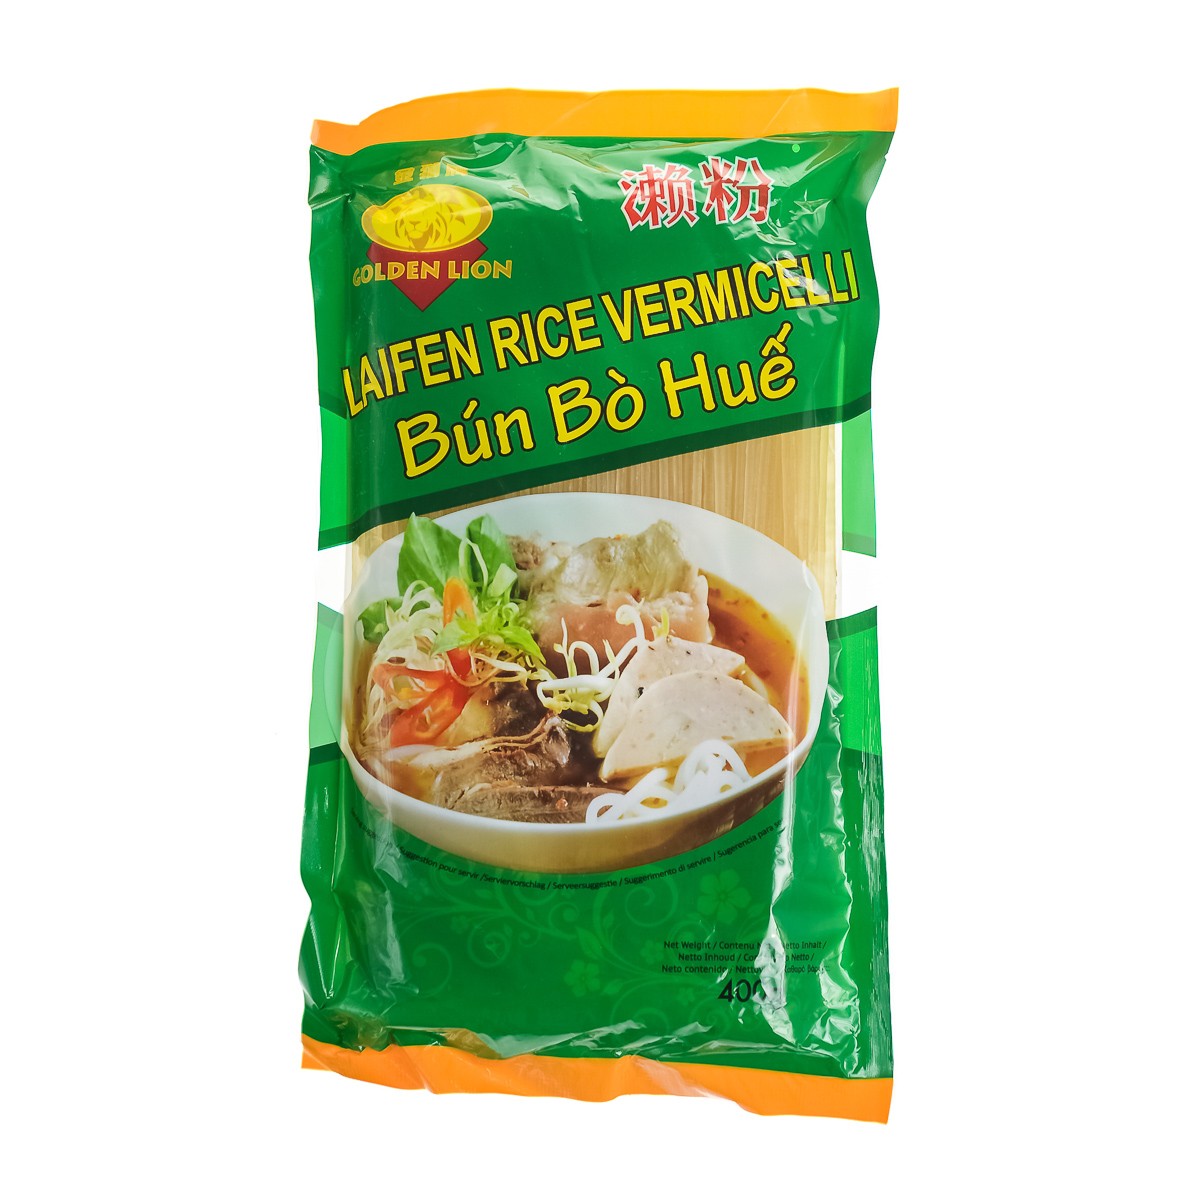 Taitei si Fidea de orez - Taitei de orez Bun Bo Hue GL 400g, asianfood.ro